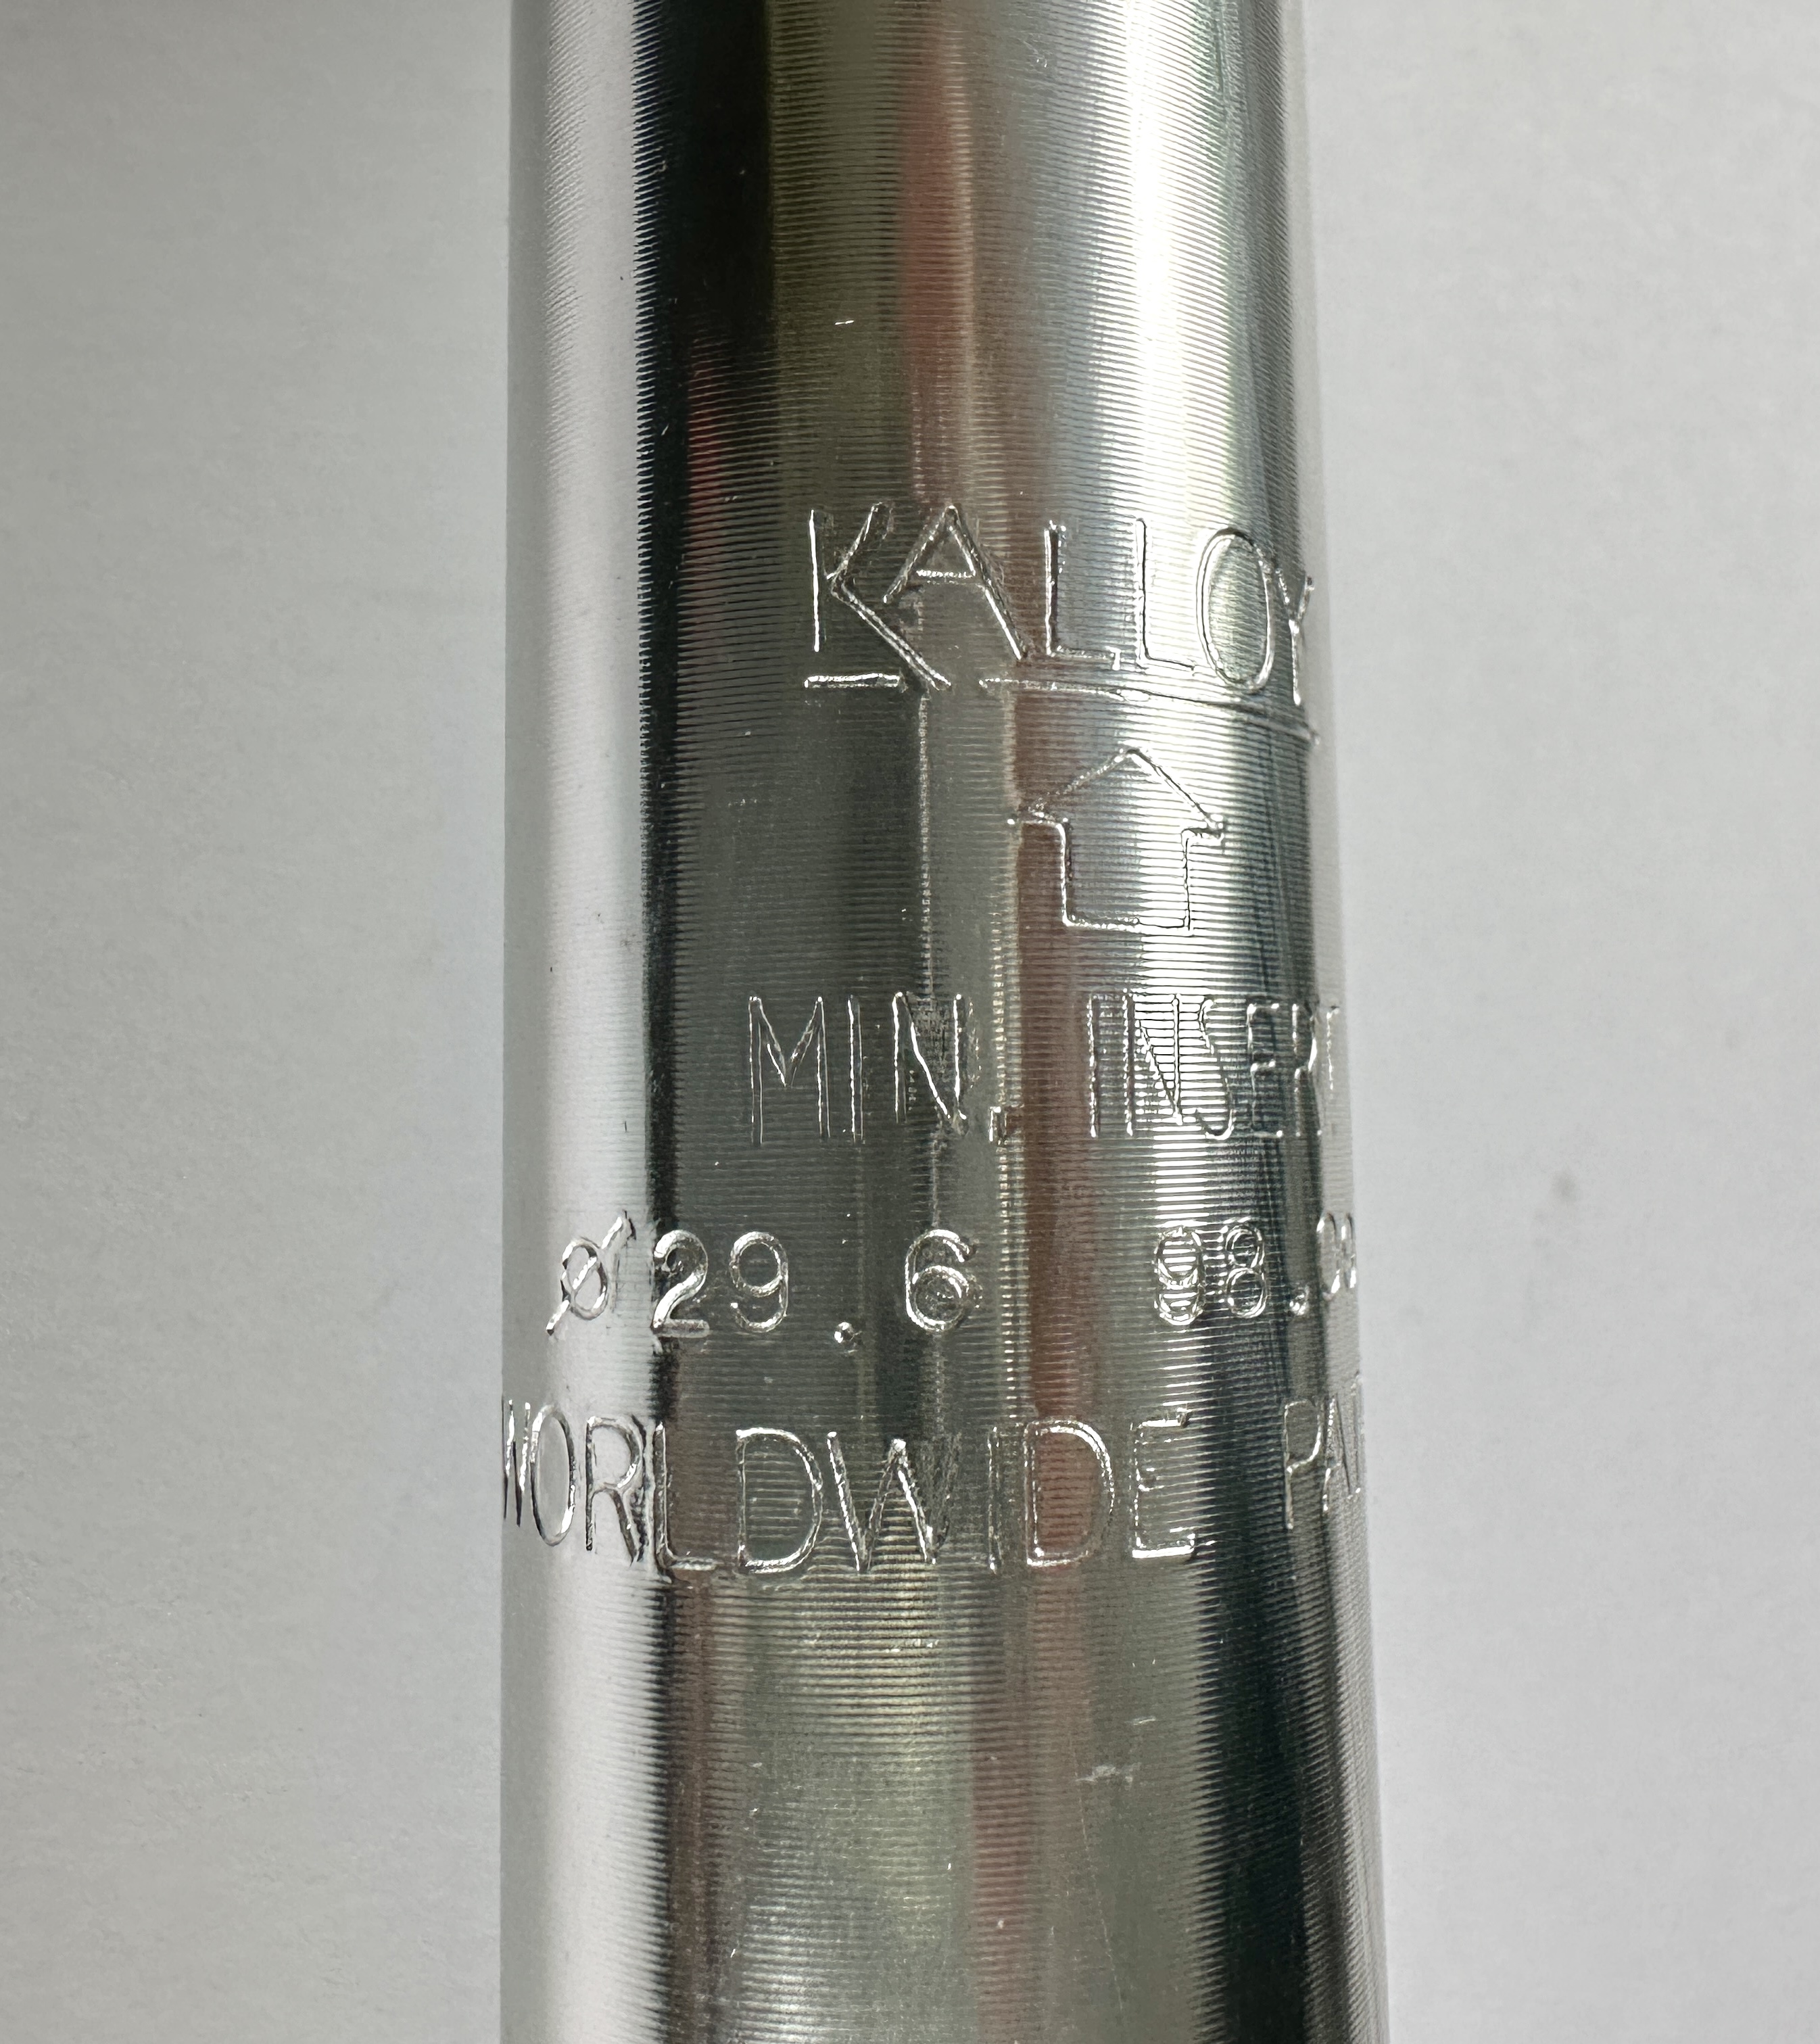 Kalloy SP 248  Tija de sillín con patente  29,6 mm  350 mm Alu